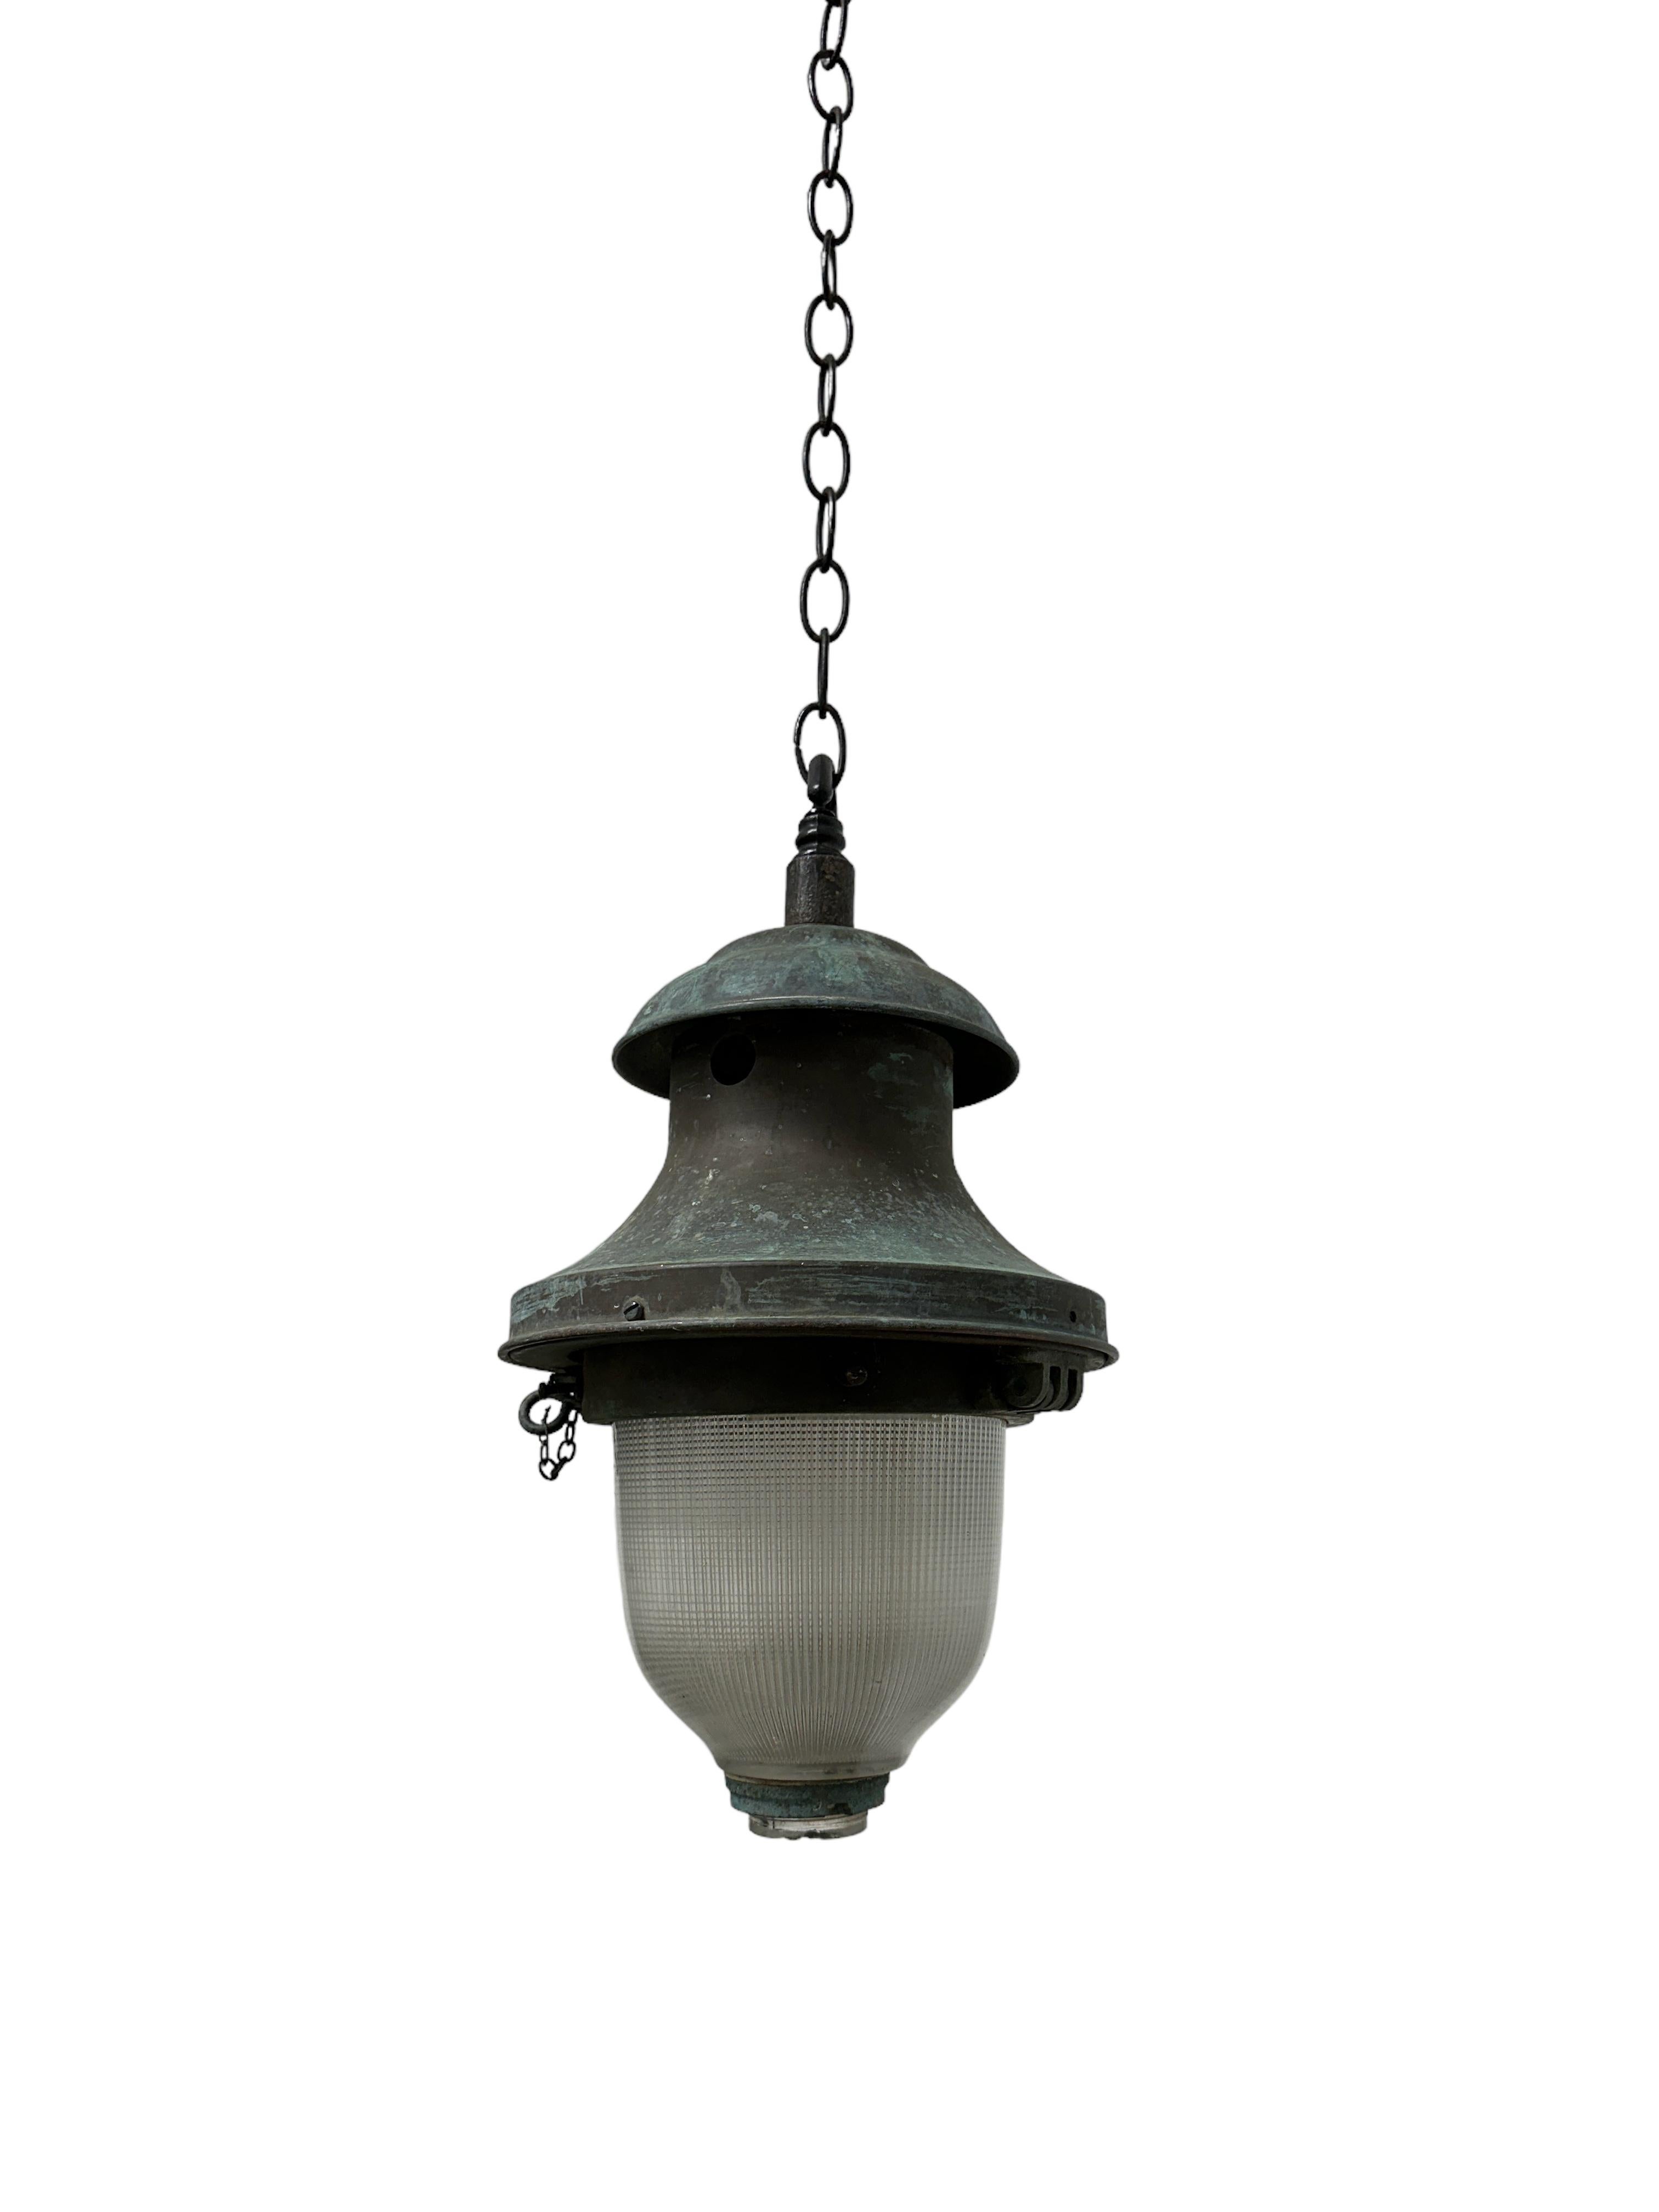 Copper Antique Industrial French Holophane Devant Ceiling Pendant Street Light Lamp For Sale